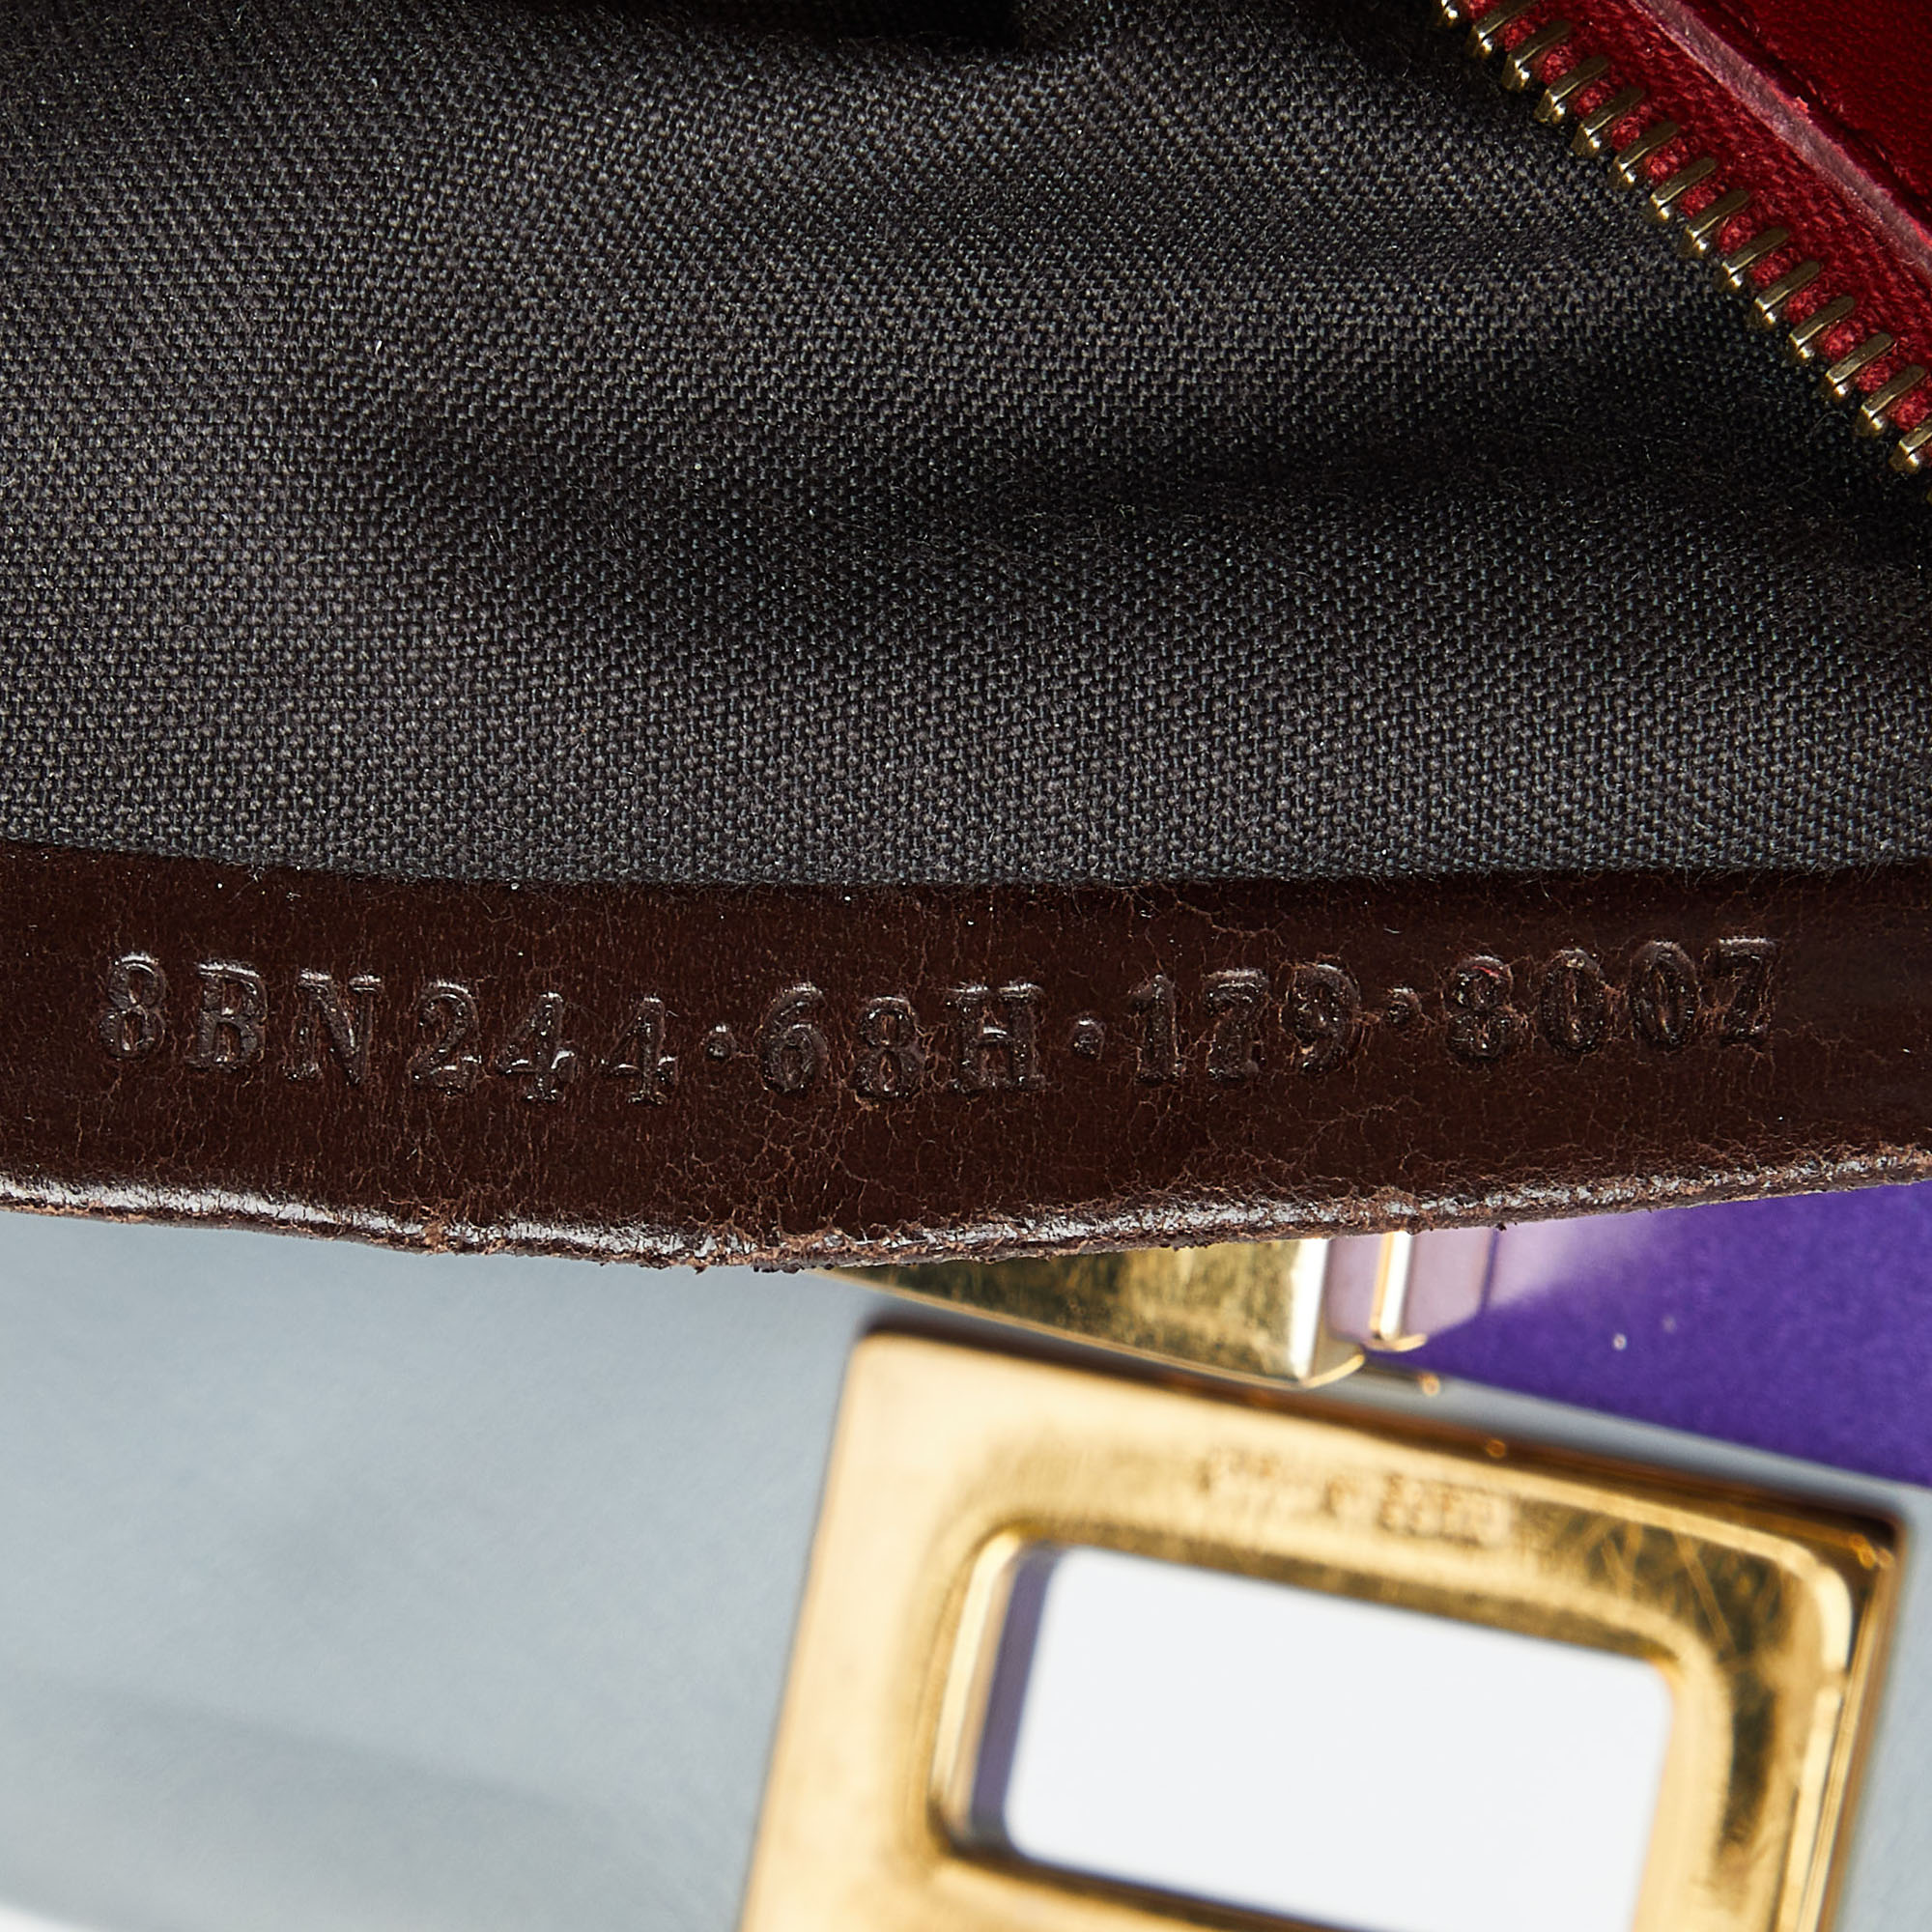 Fendi Blue/Purple Leather Mini Peekaboo Top Handle Bag